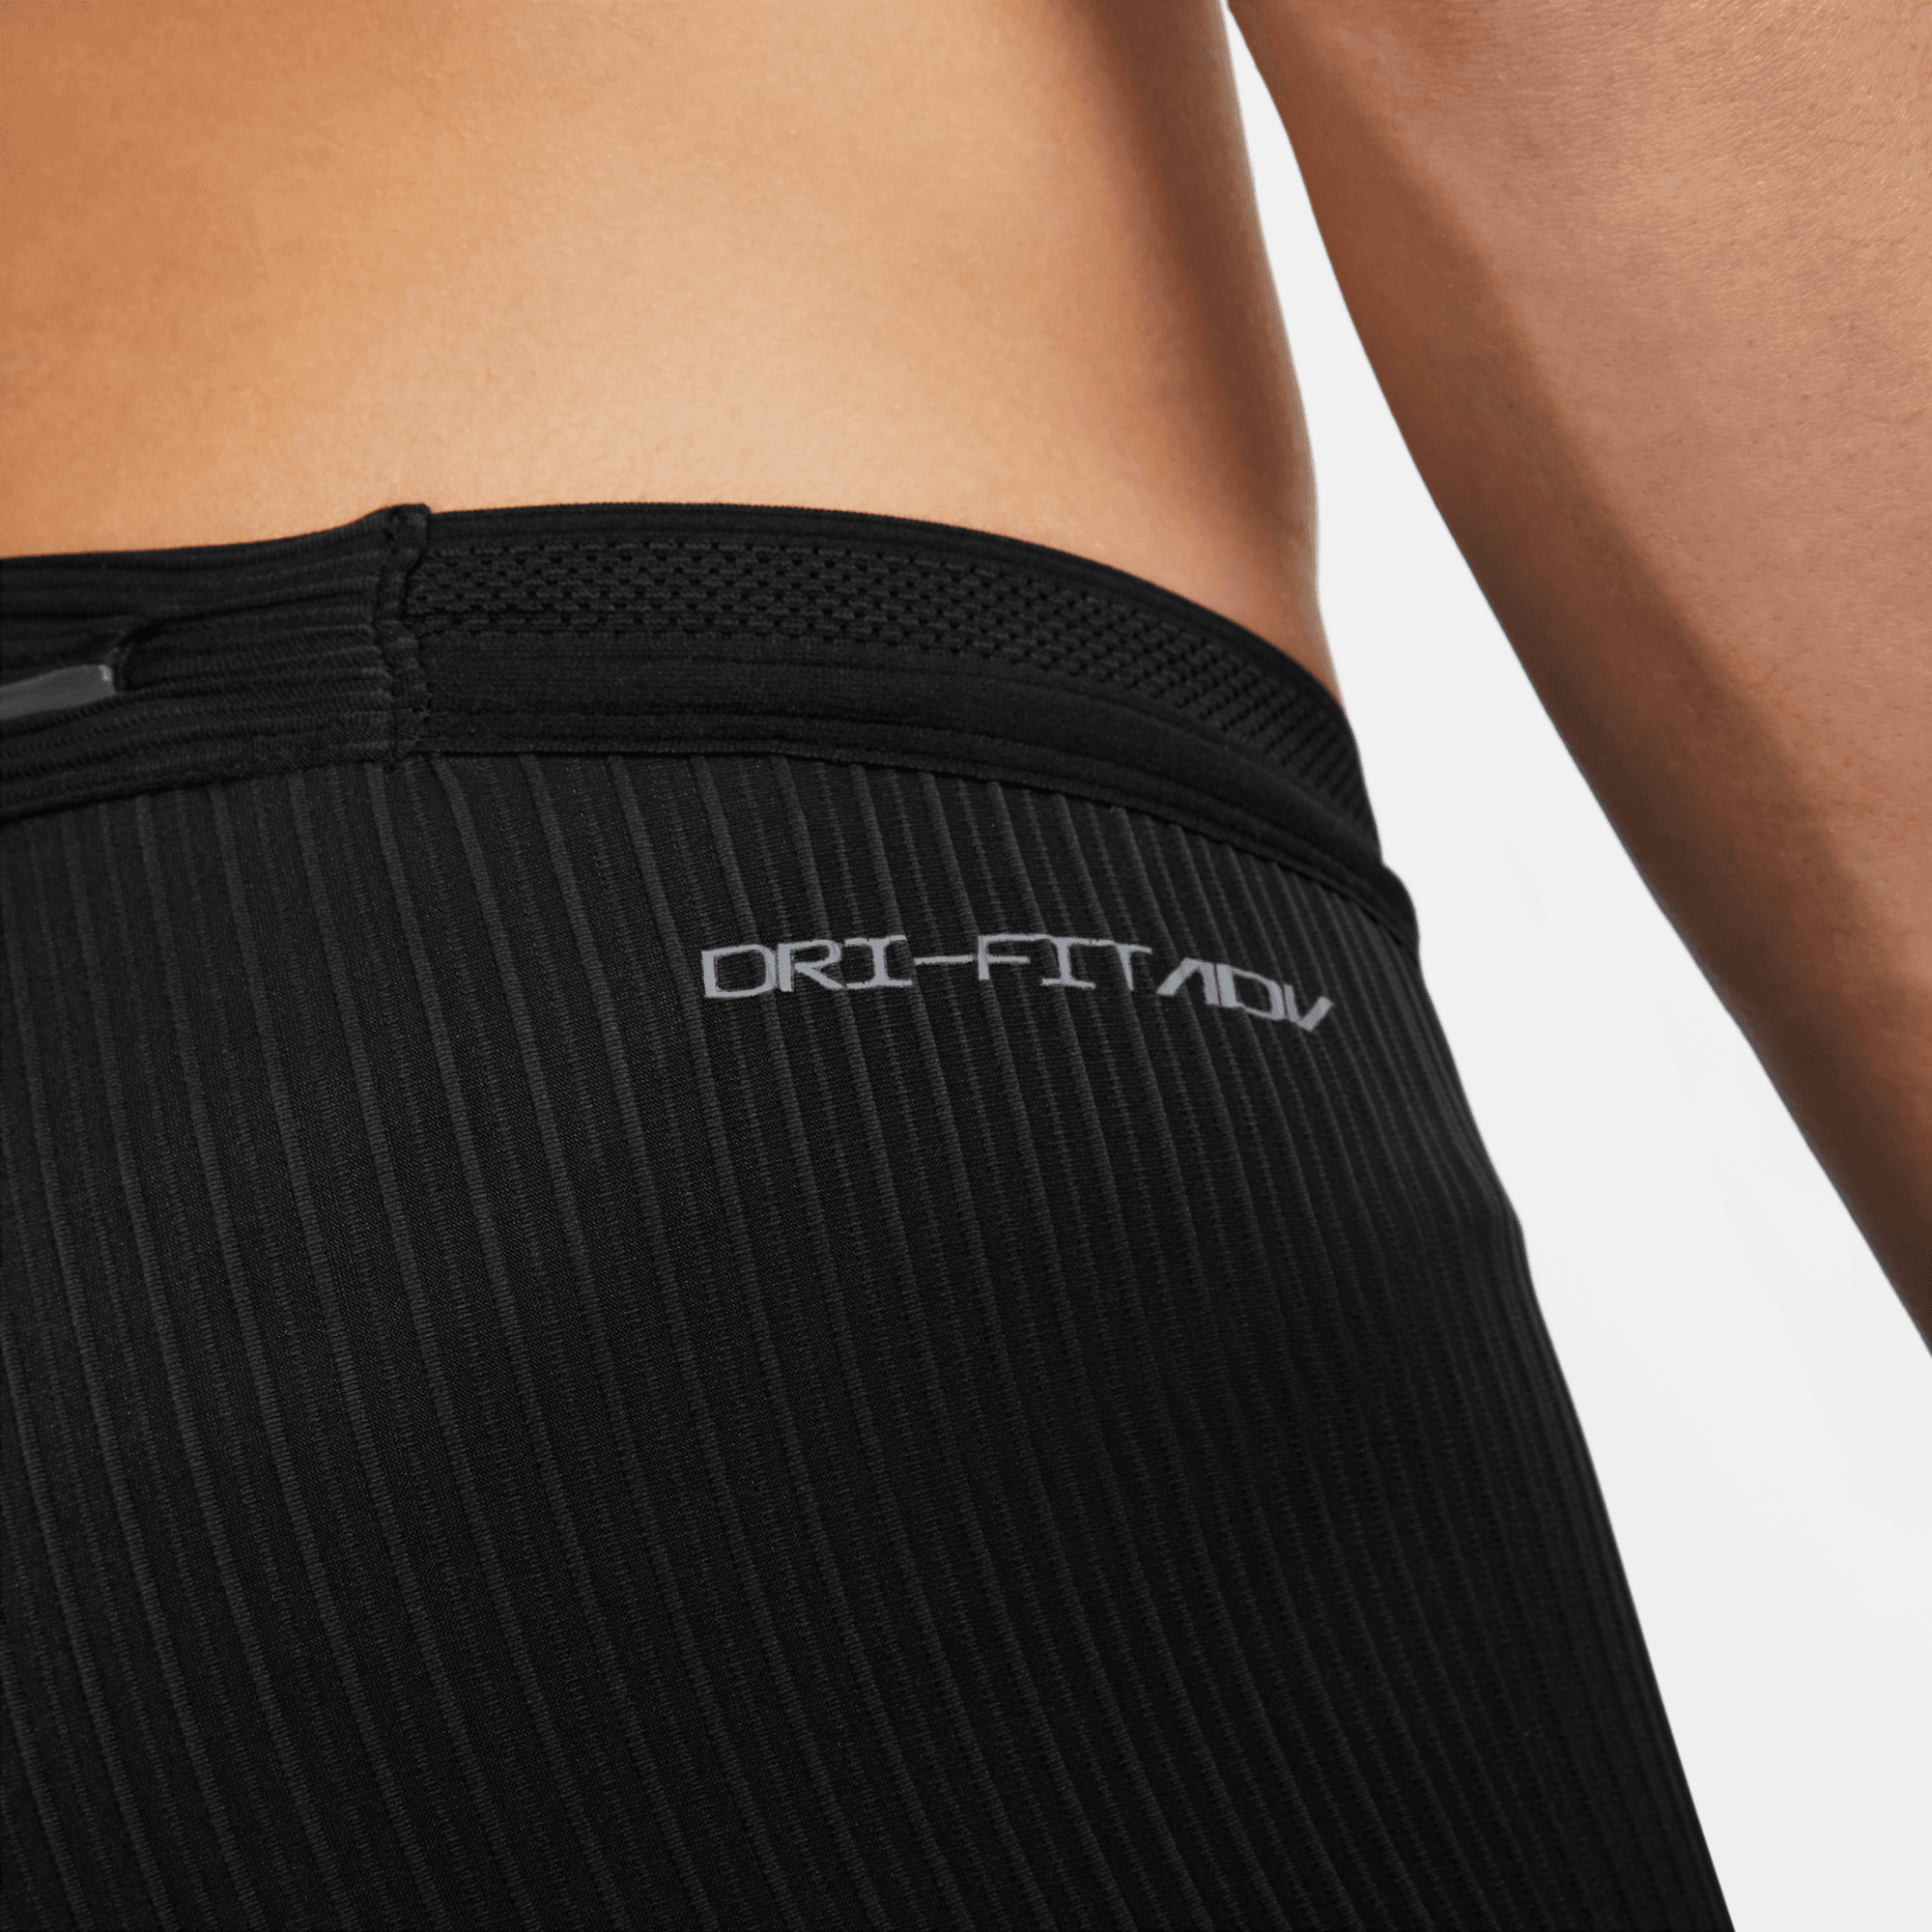 Nike AeroSwift Men's Dri-FIT ADV 2 Brief-Lined Running Shorts